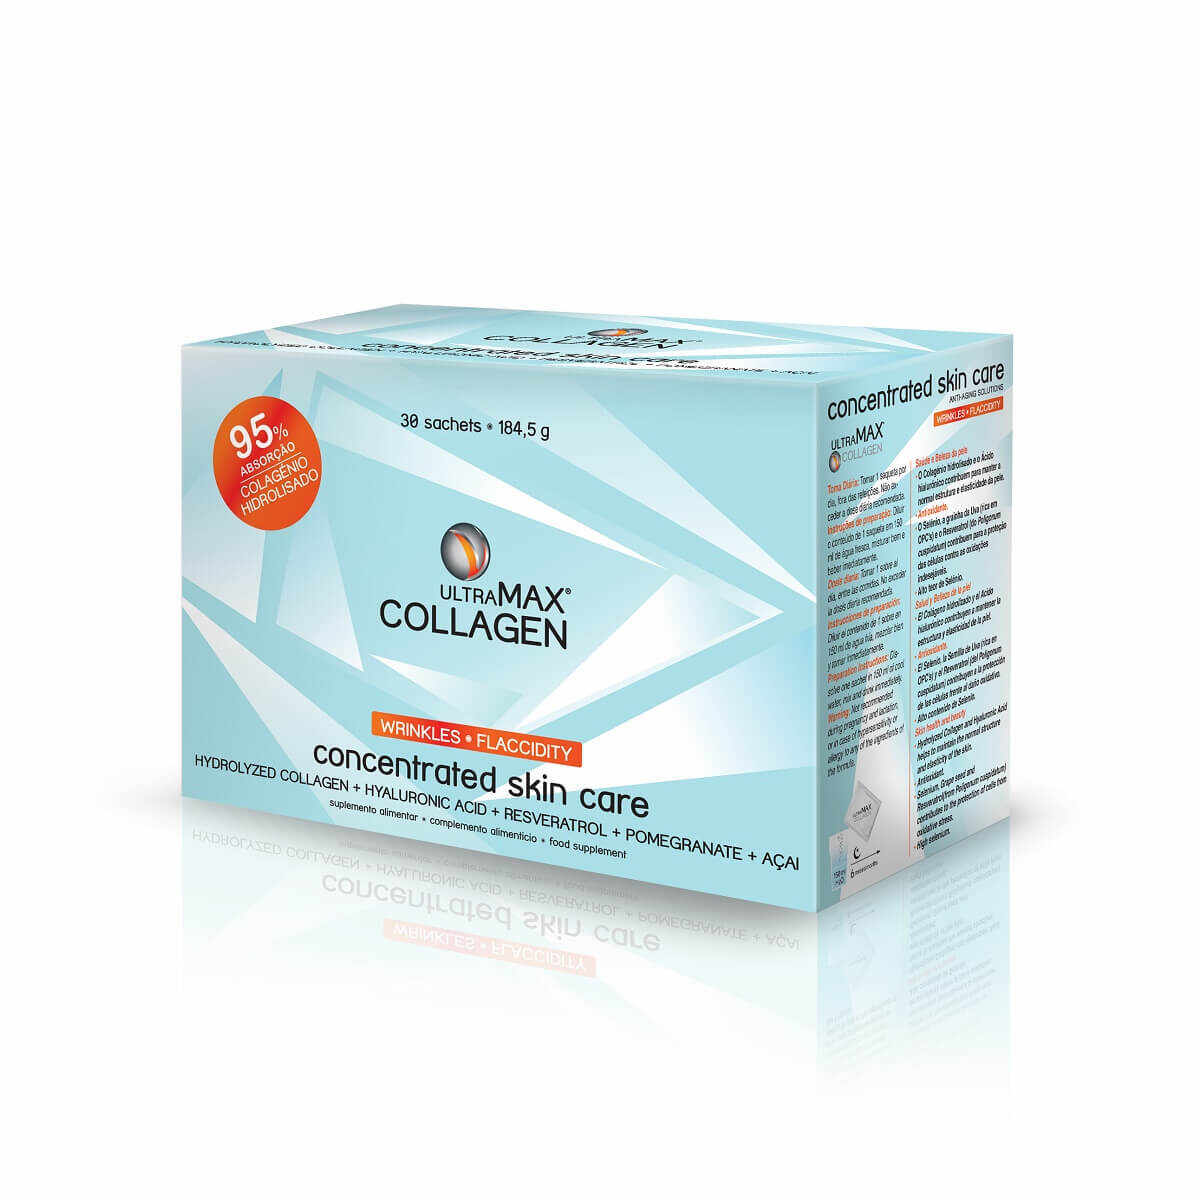 Ultramax Collagen, 30 plicuri, Gold Nutrition